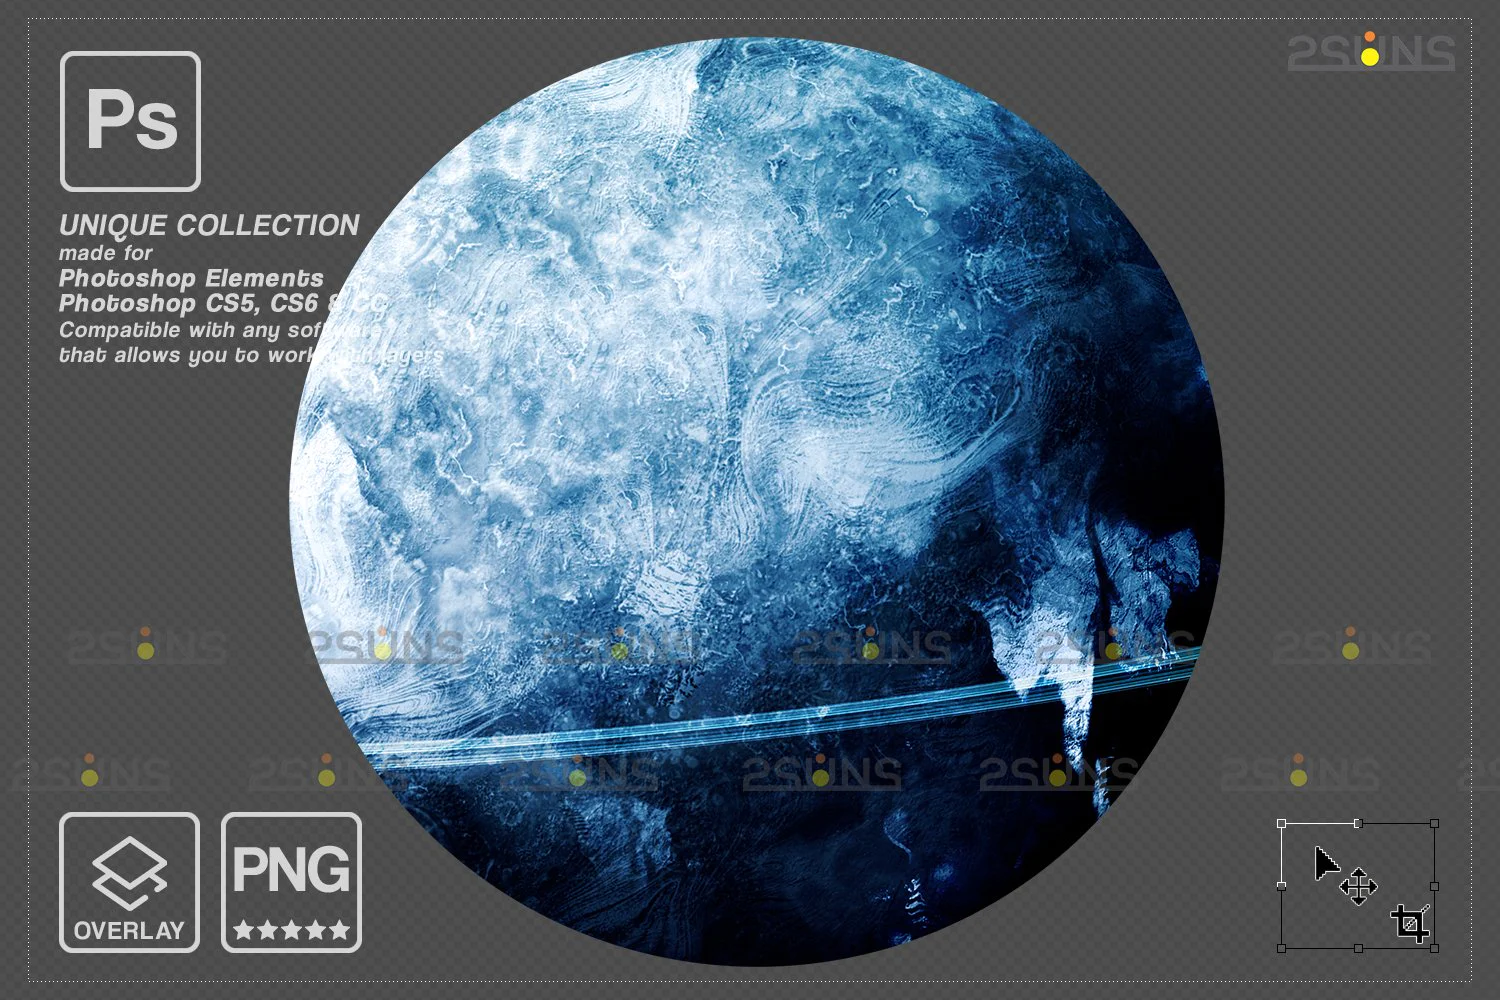 2325 11款行星宇宙太空PHOTOSHOP覆盖PNG空间剪贴画夜空Space planets v2 photo overlays